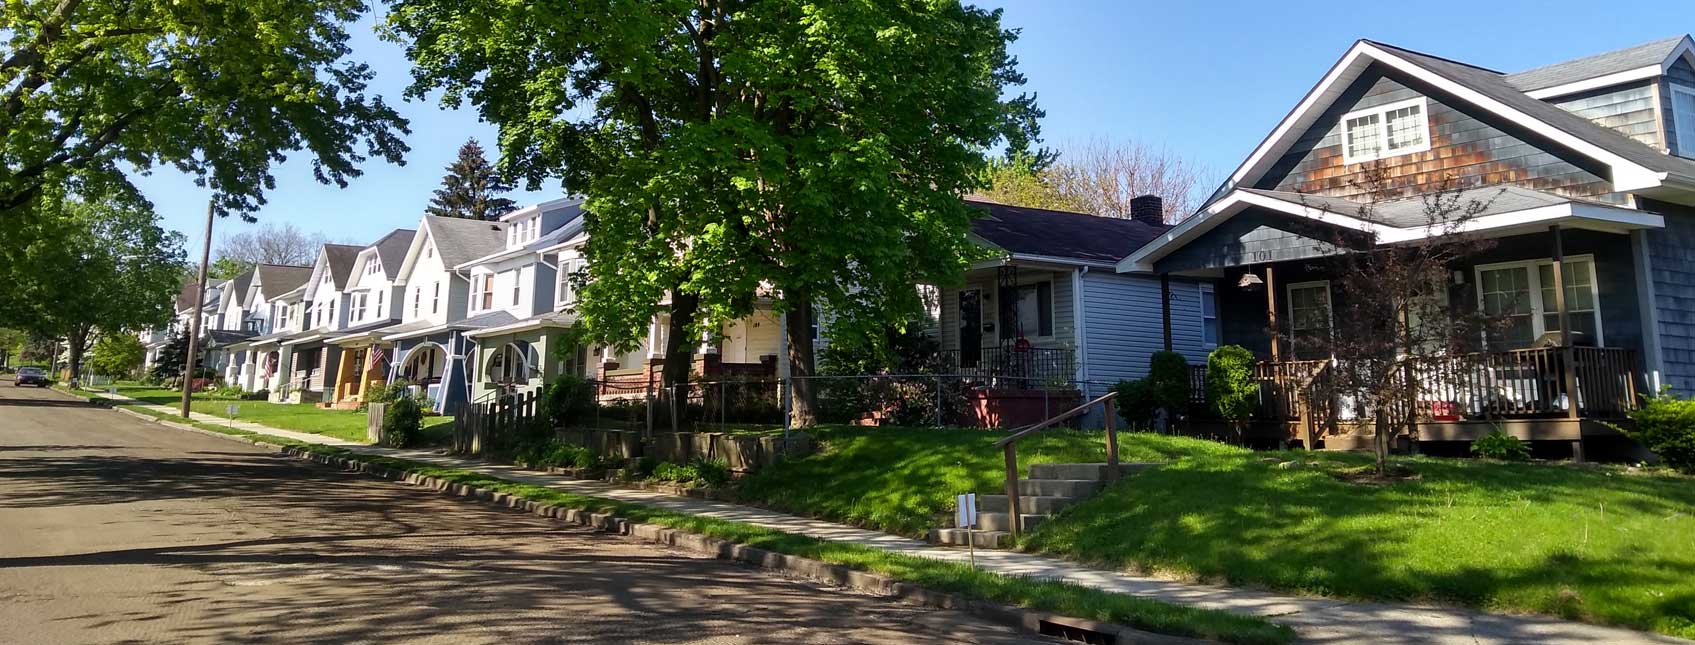 homes in Walnut Hills, Dayton OH